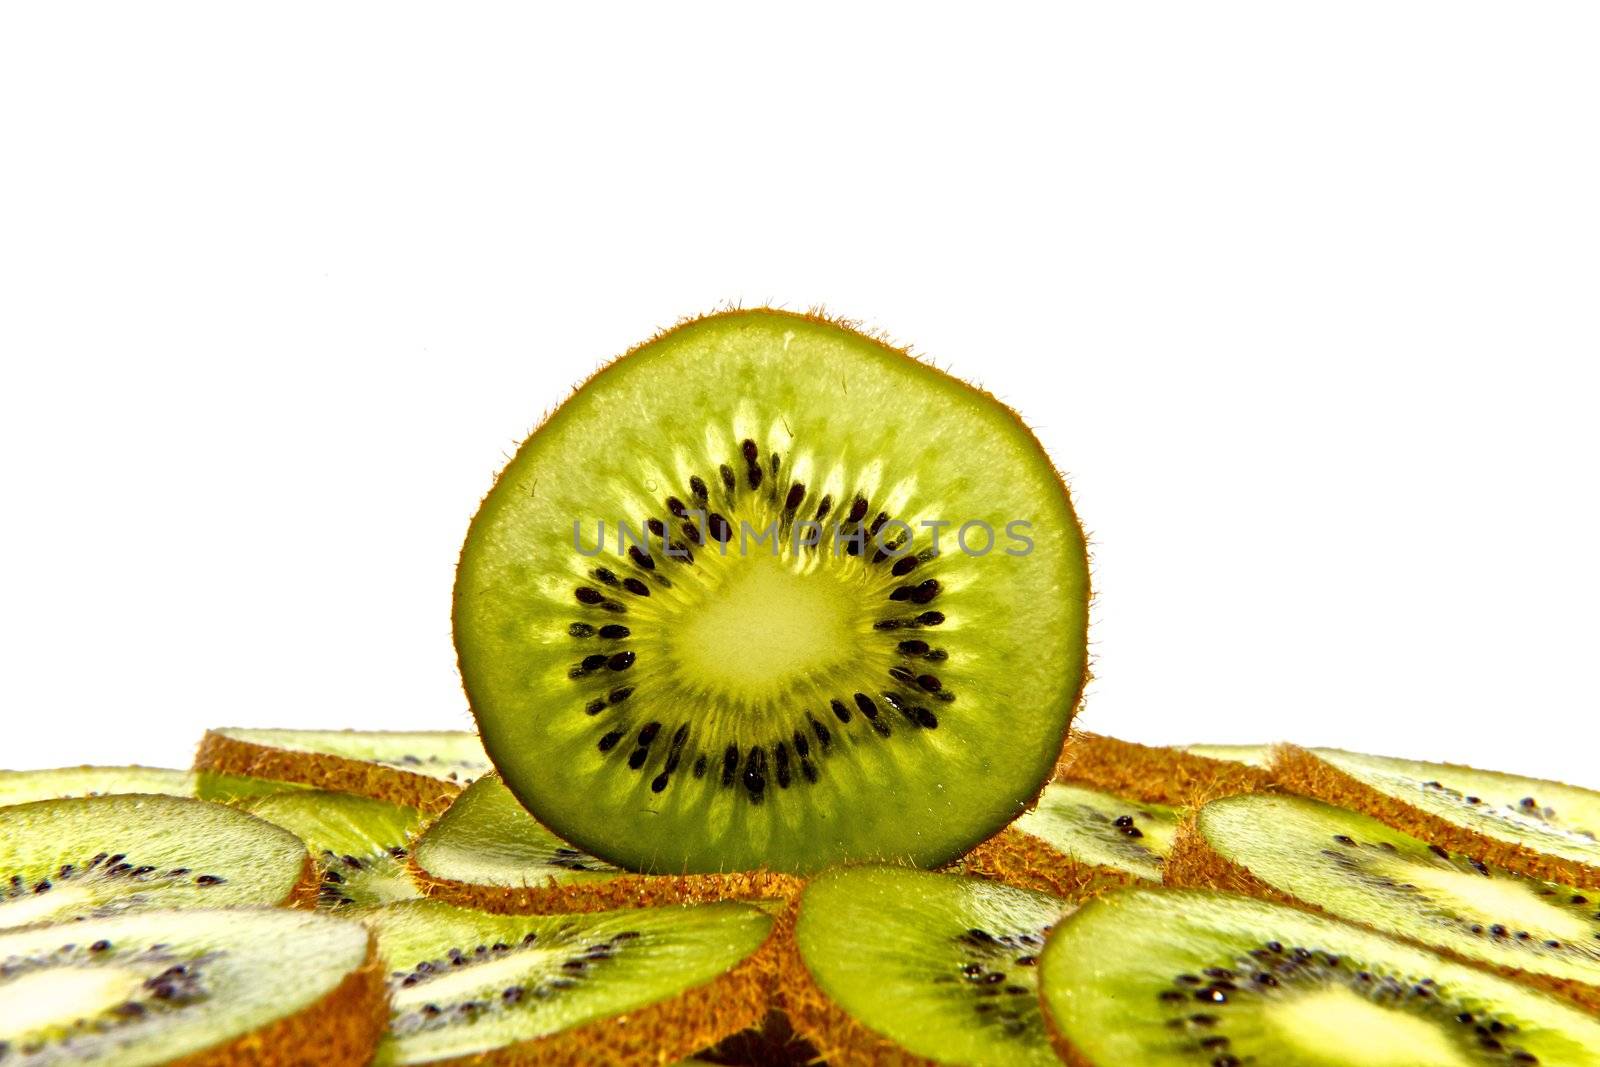 Delicious Kiwi Fruit cut in slices